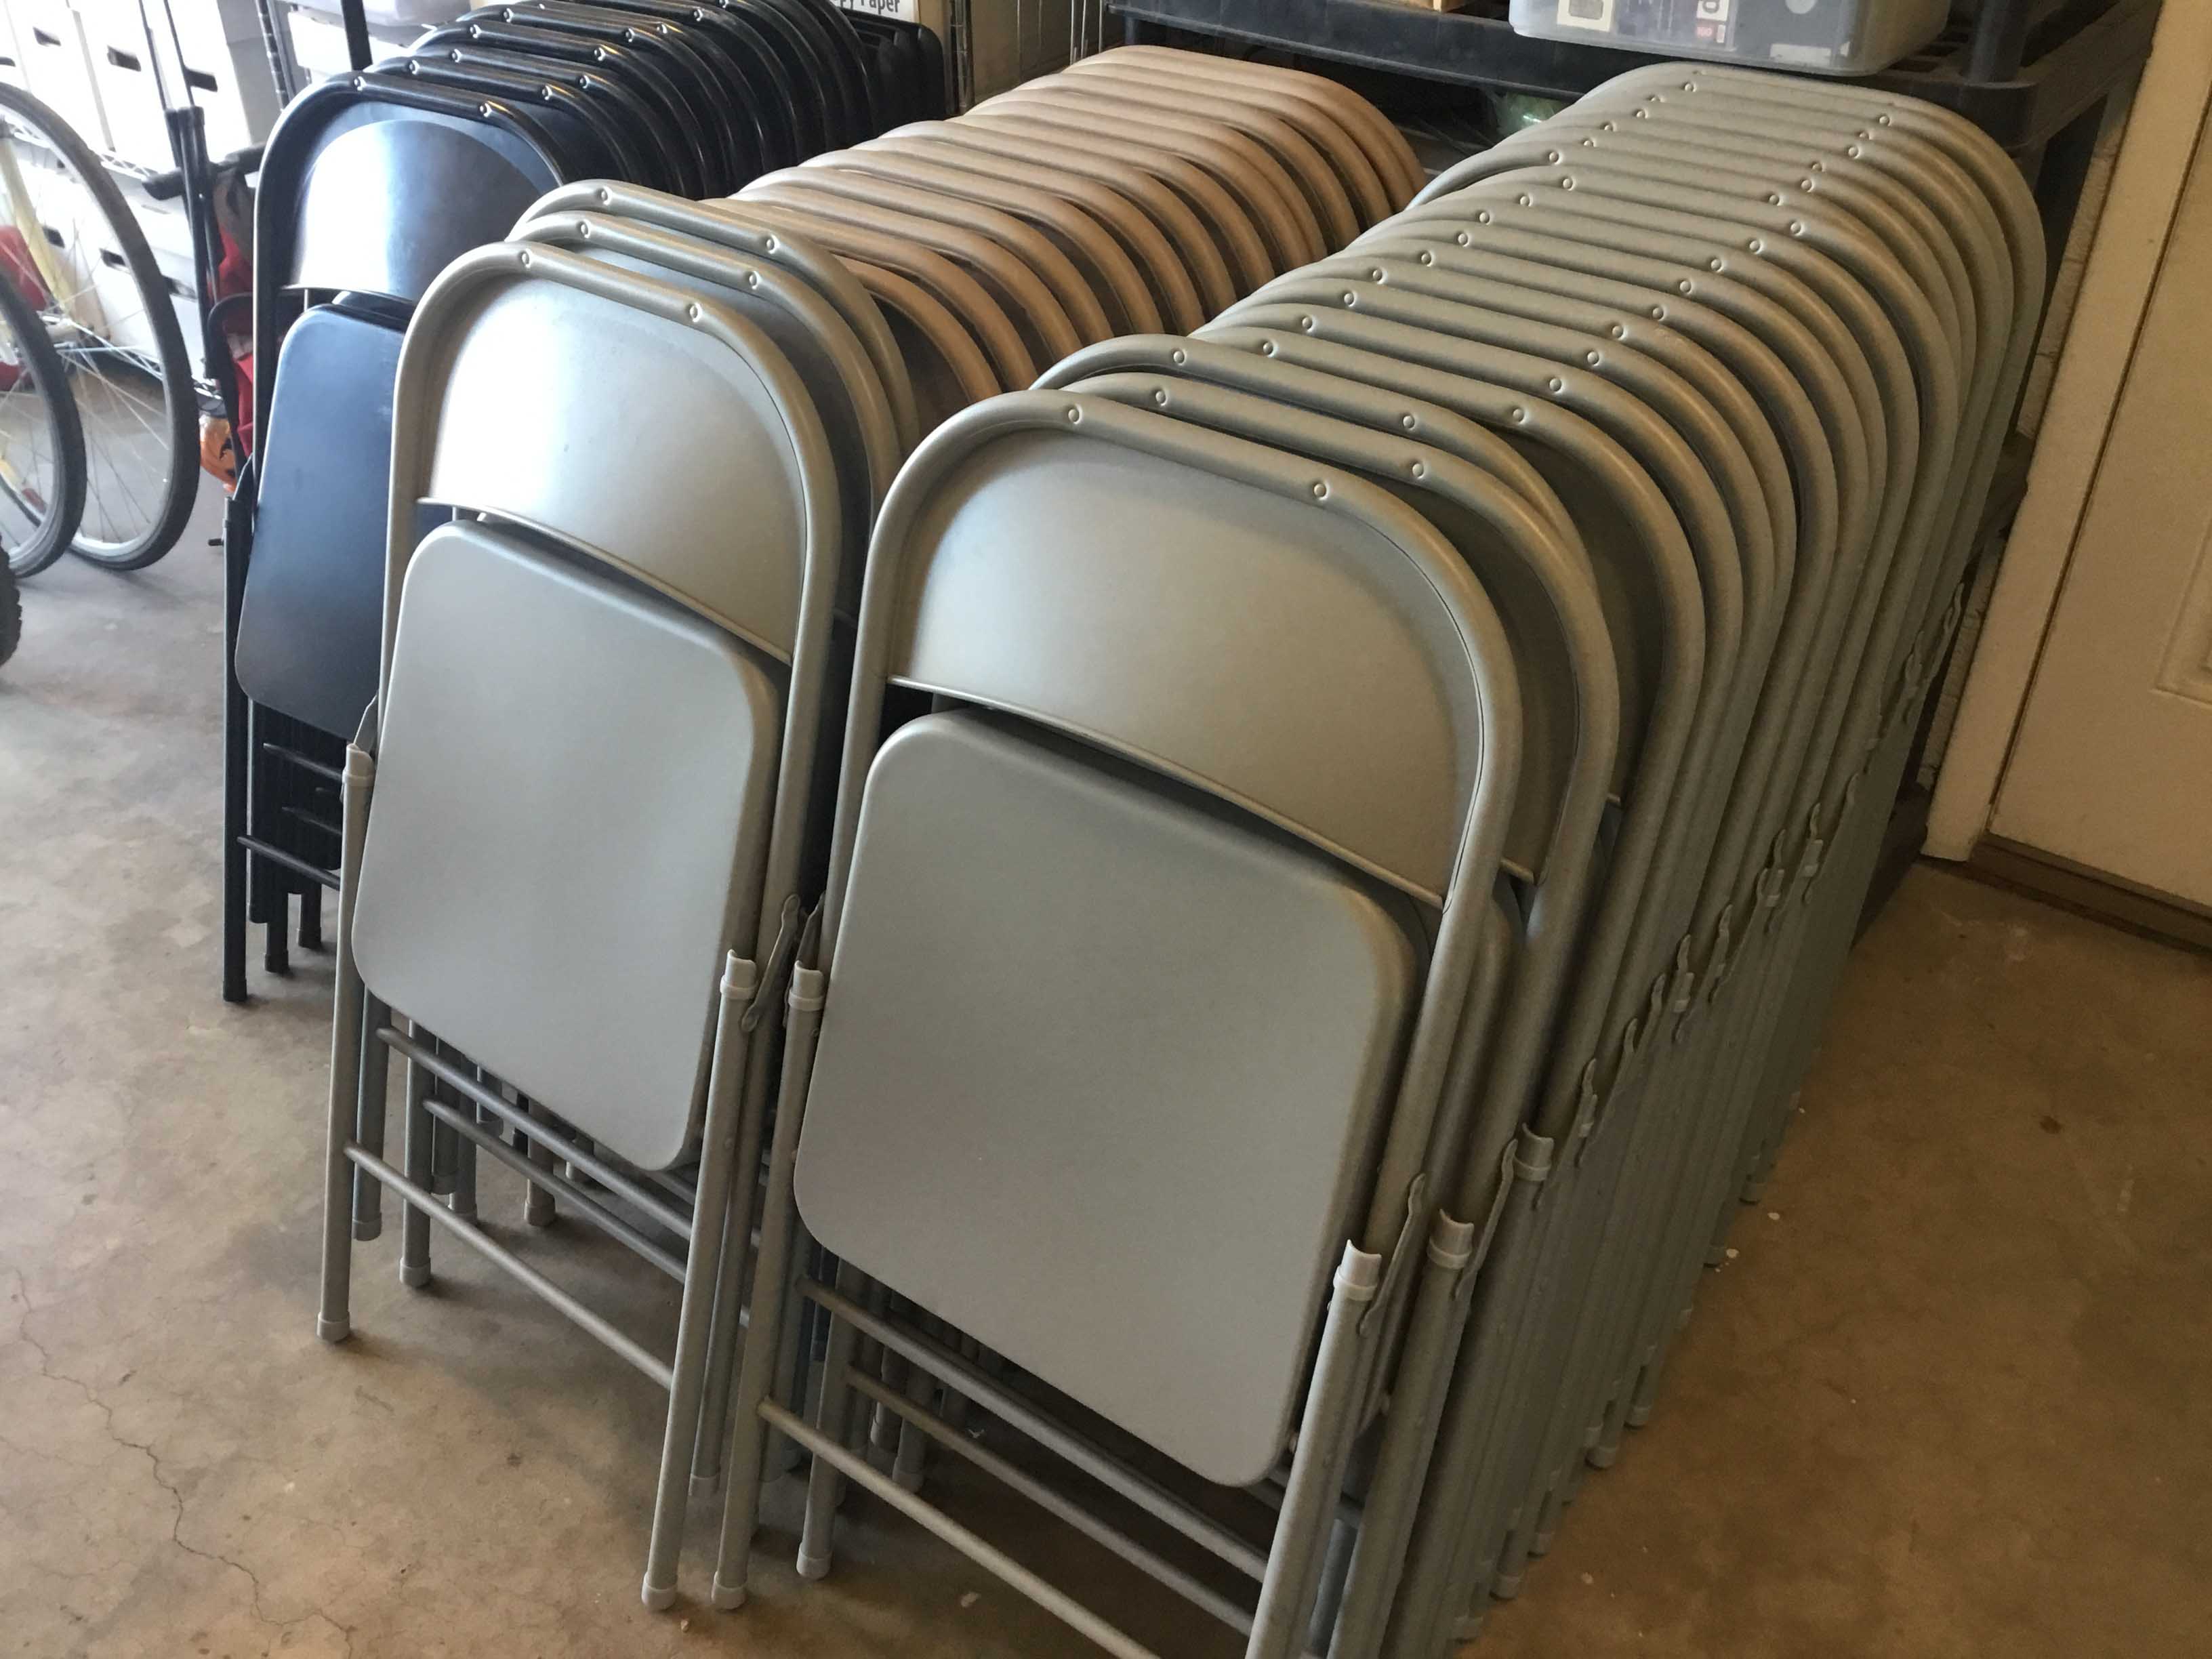 folding chairs (steel, gray)